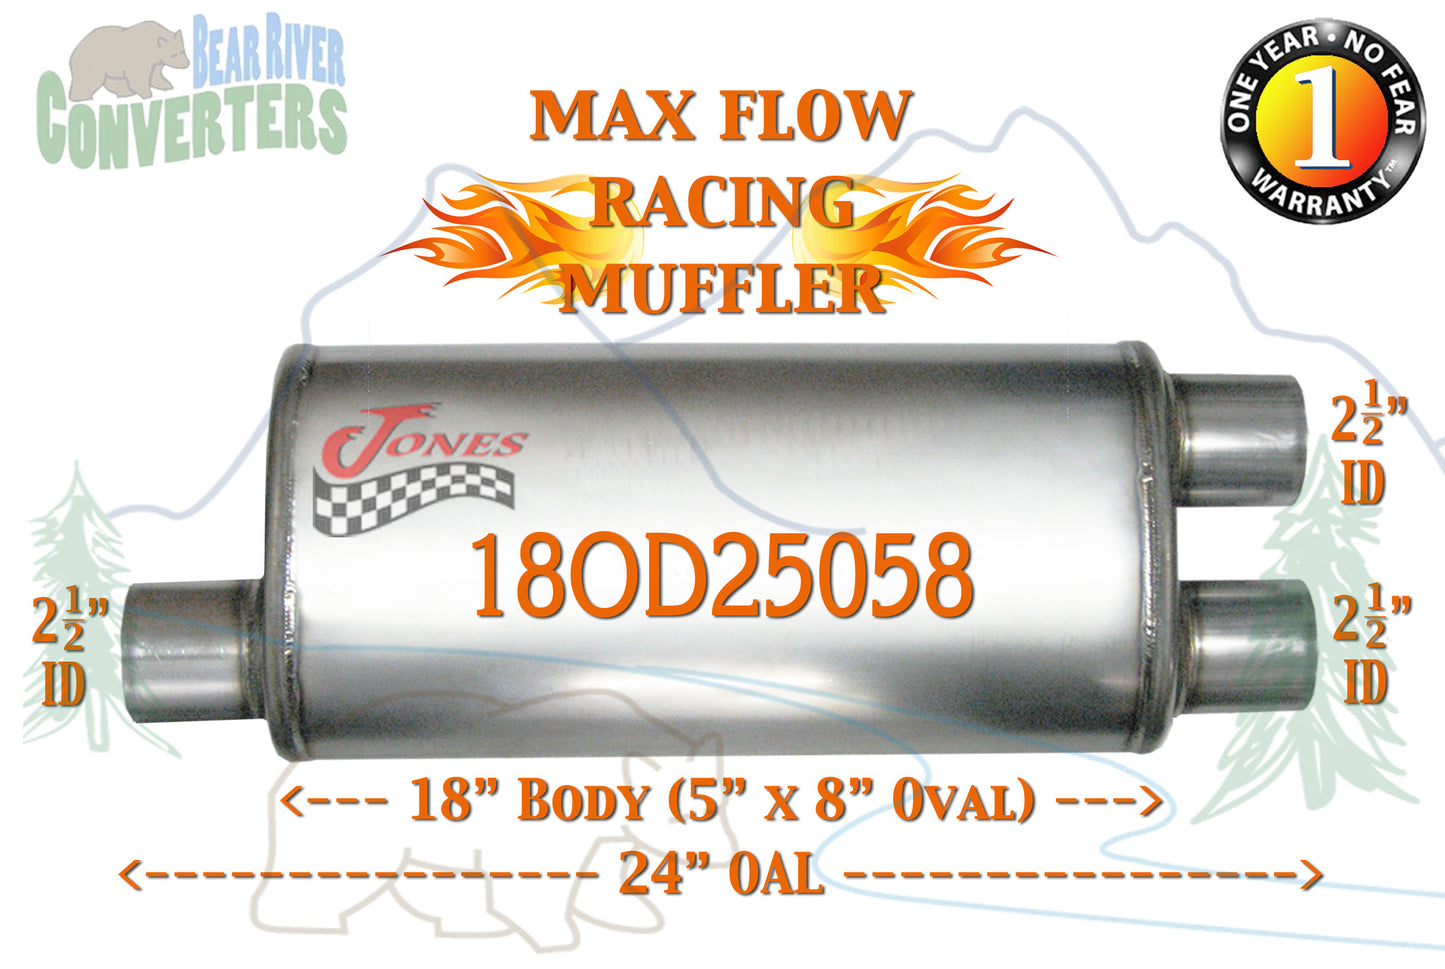 18OD25058 Jones MF2265 Max Flow Racing Muffler 18” Oval Body 2 1/2” 2.5” Pipe Offset/Dual 24” OAL - Bear River Converters